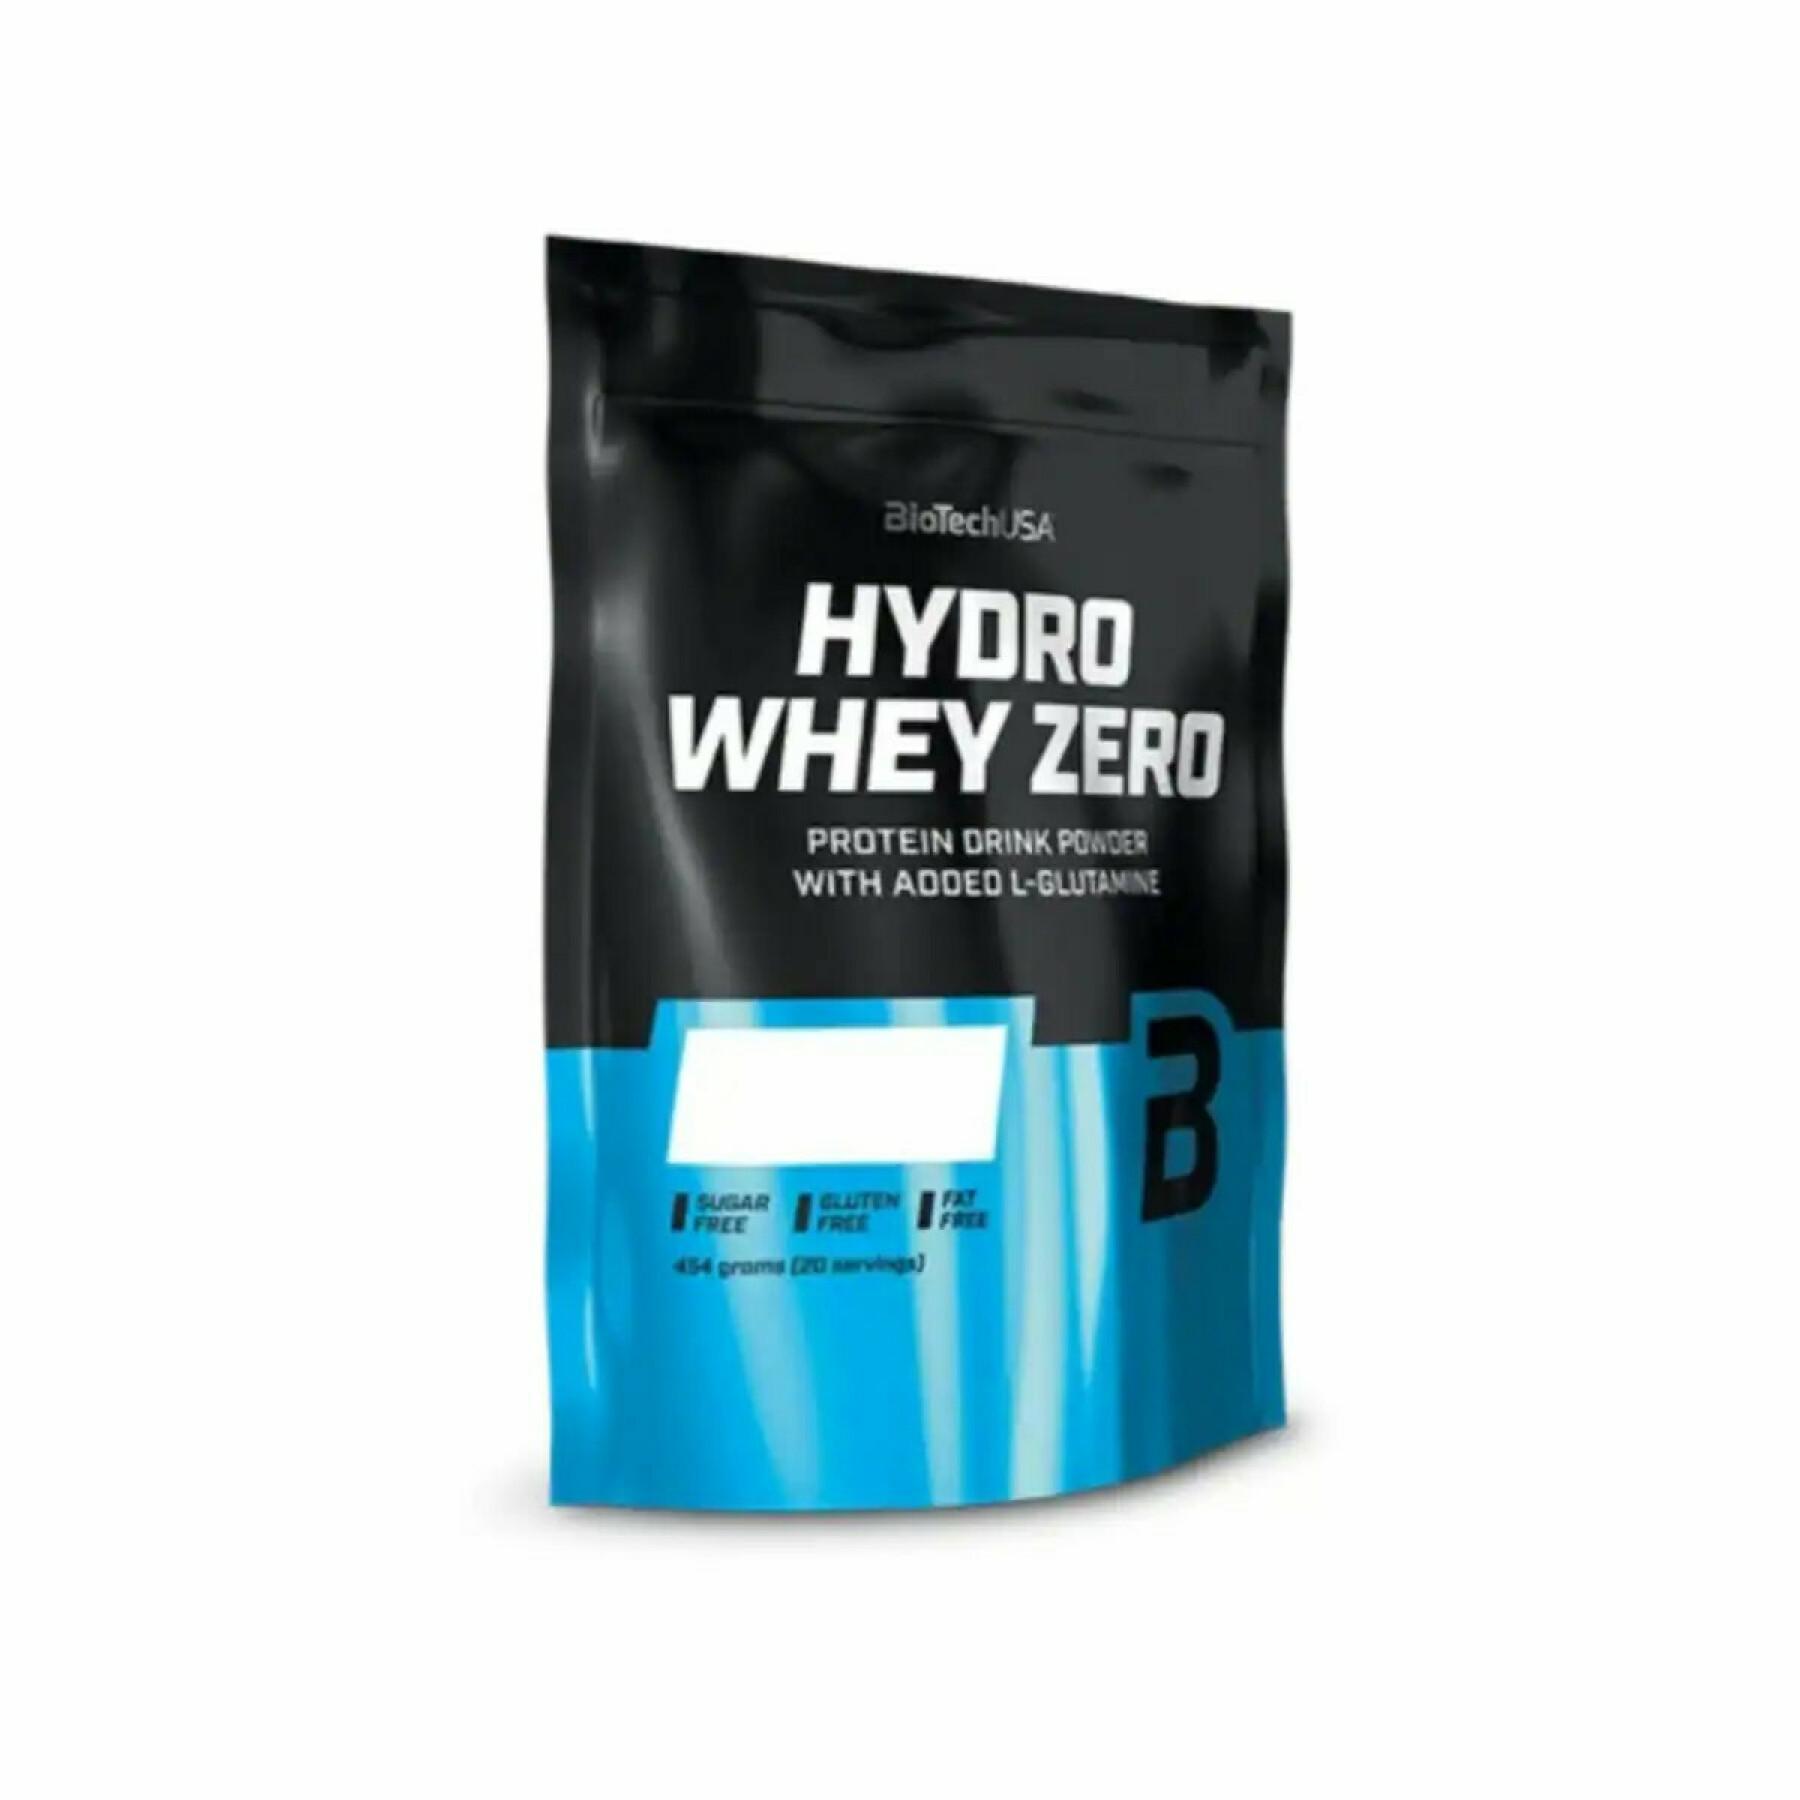 Lot de 10 sacs de protéines Biotech USA hydro whey zero - Vanille - 454g